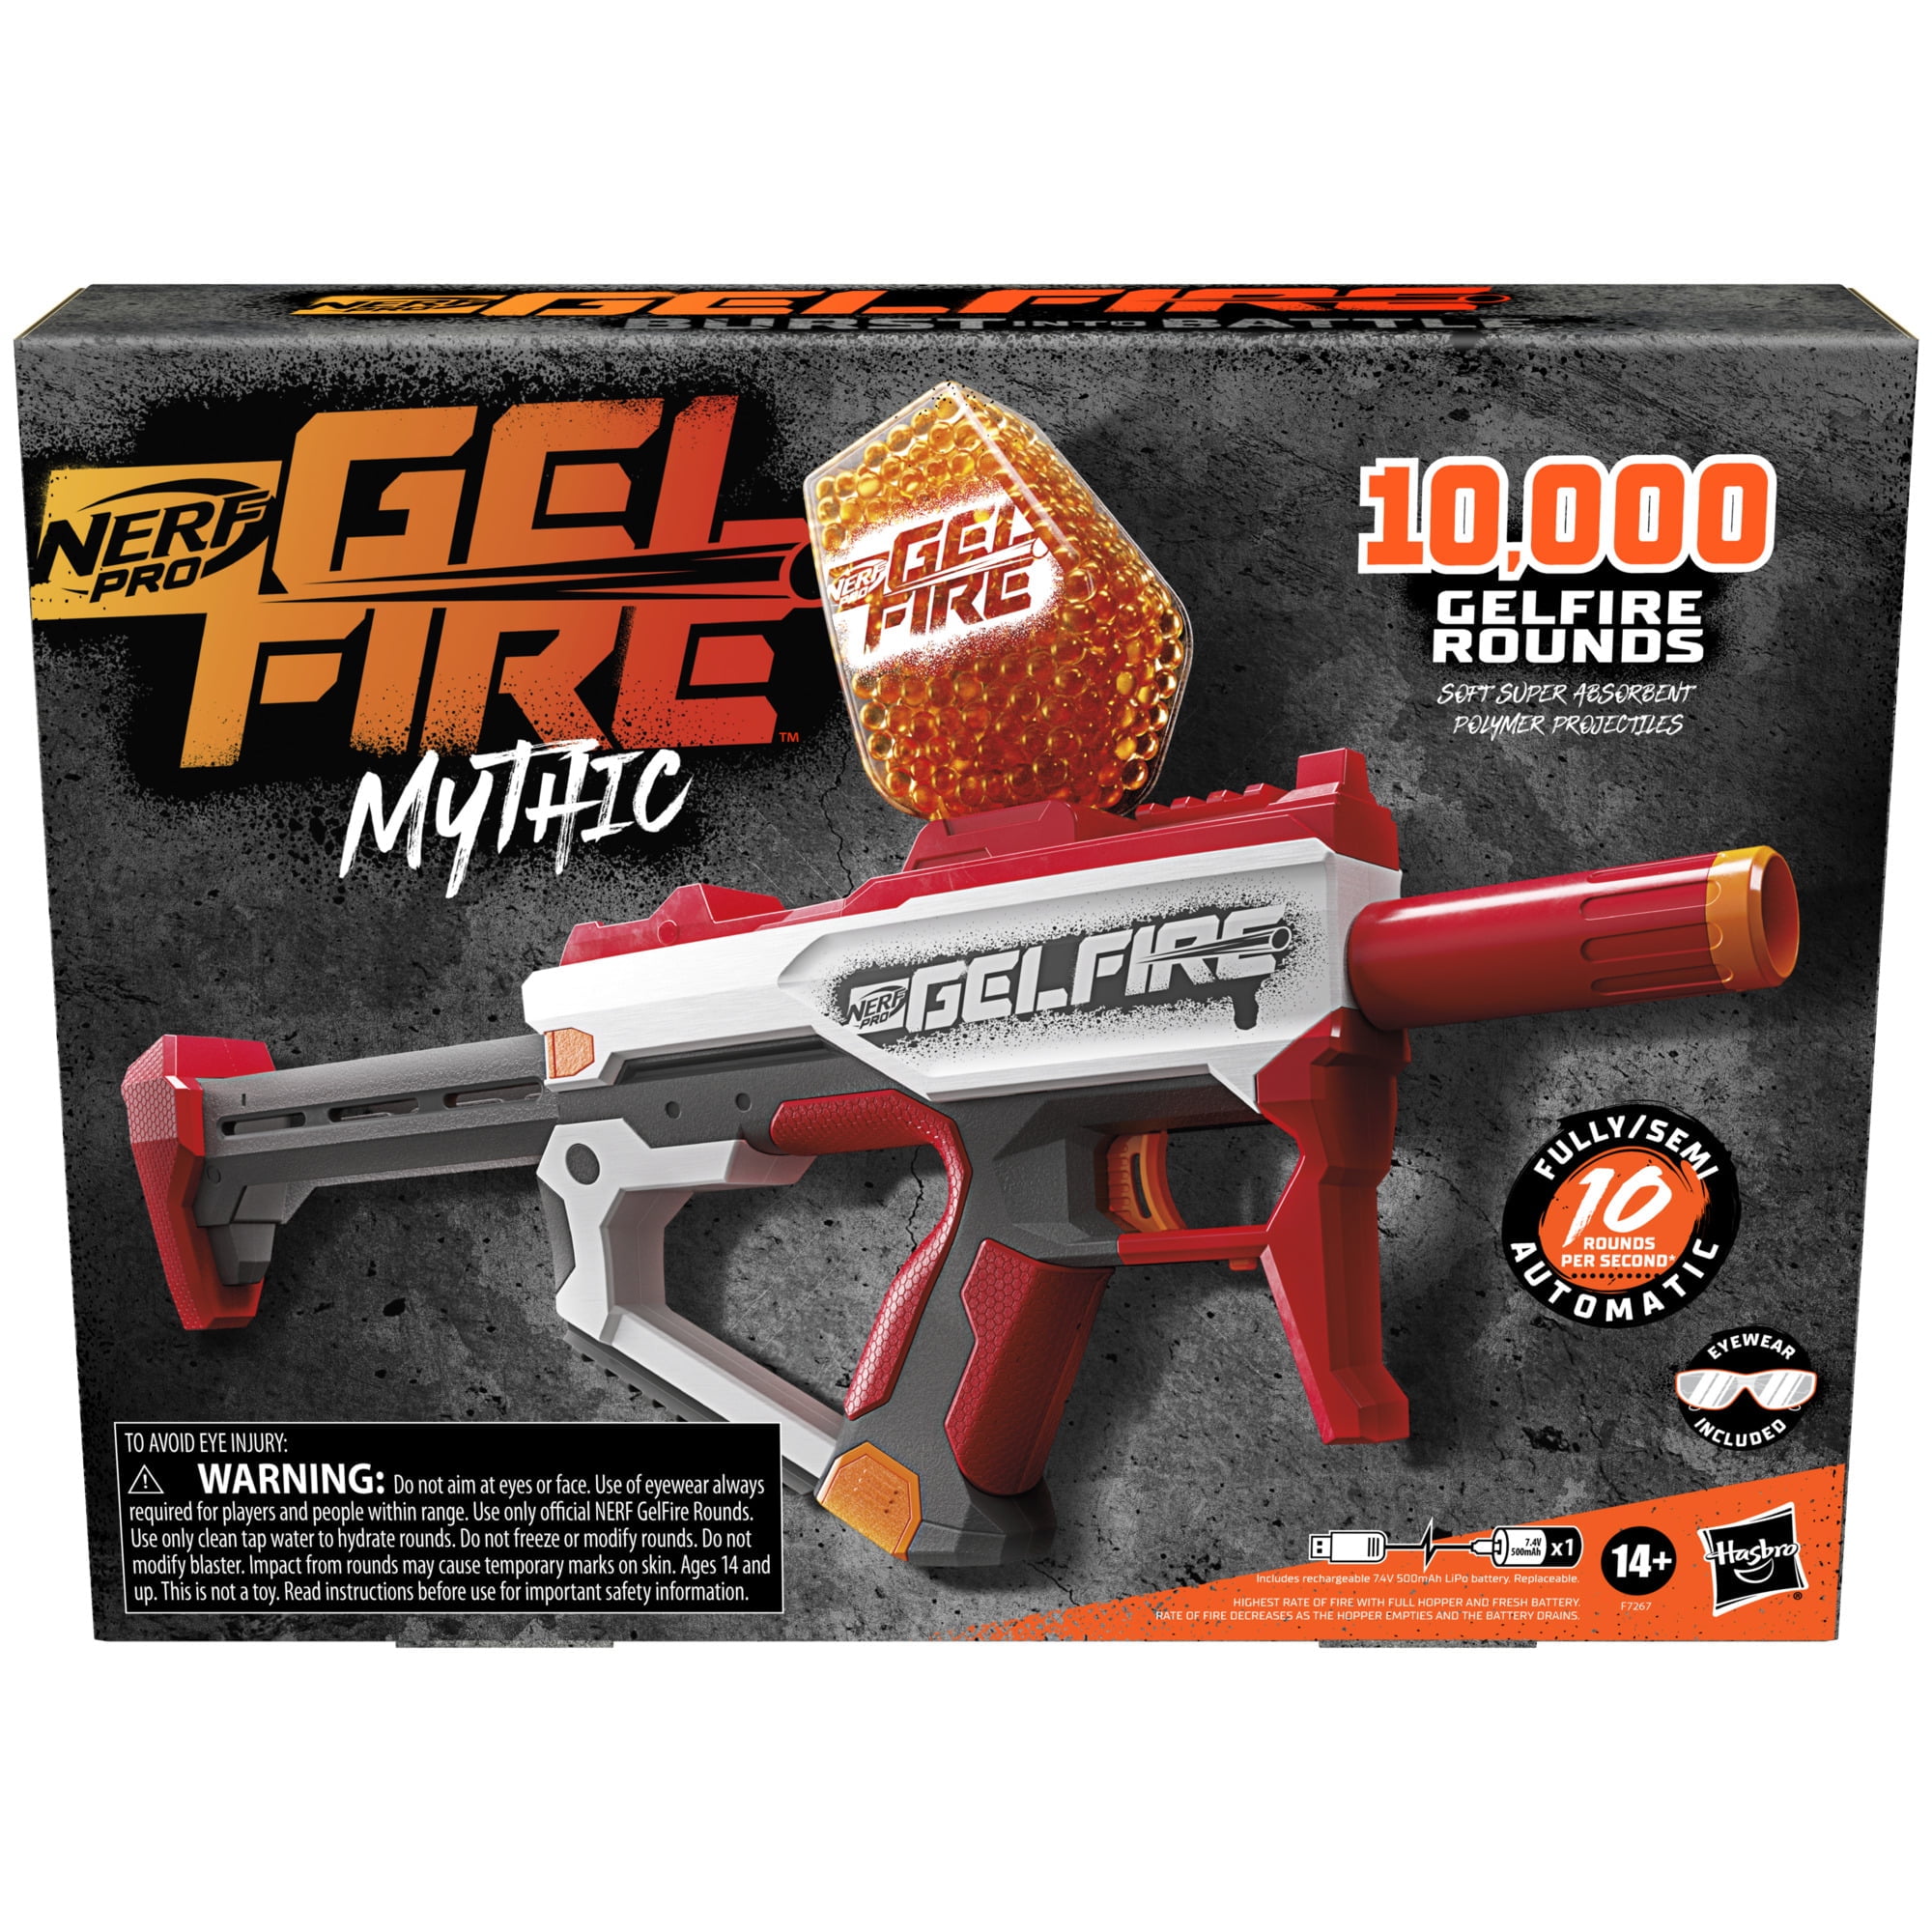 Nerf Pro Gelfire Mythic Blaster, 10,000 Gelfire Rounds, Hopper, Rechargeable Battery, Eyewear